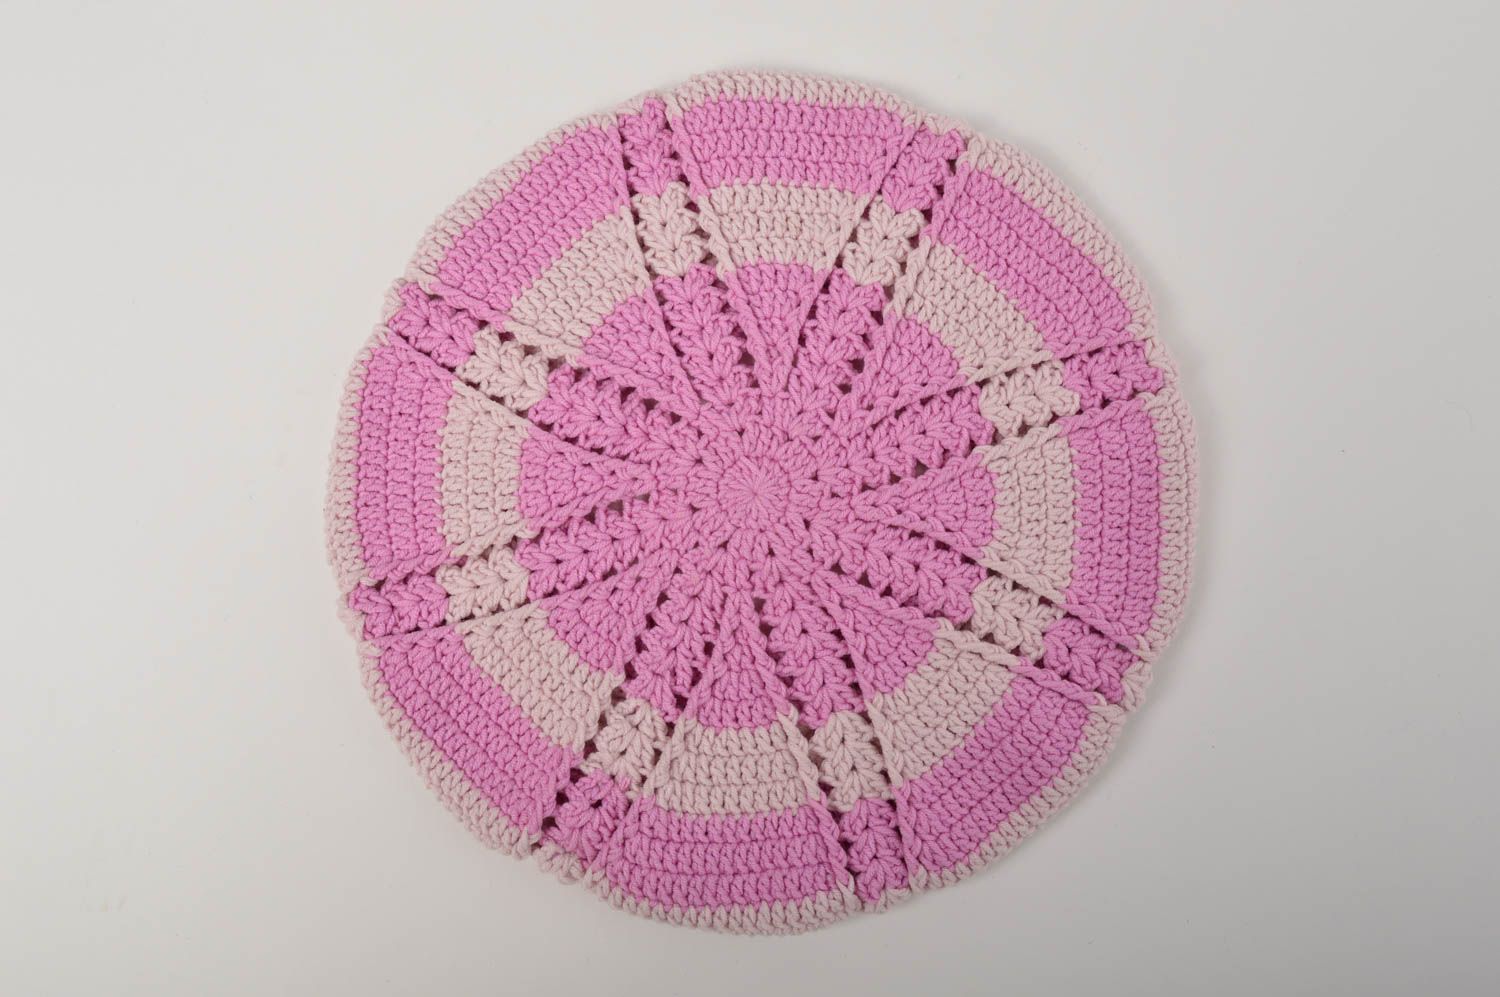 Beautiful handmade crochet har baby hat designs cute hats for kids gift ideas photo 2